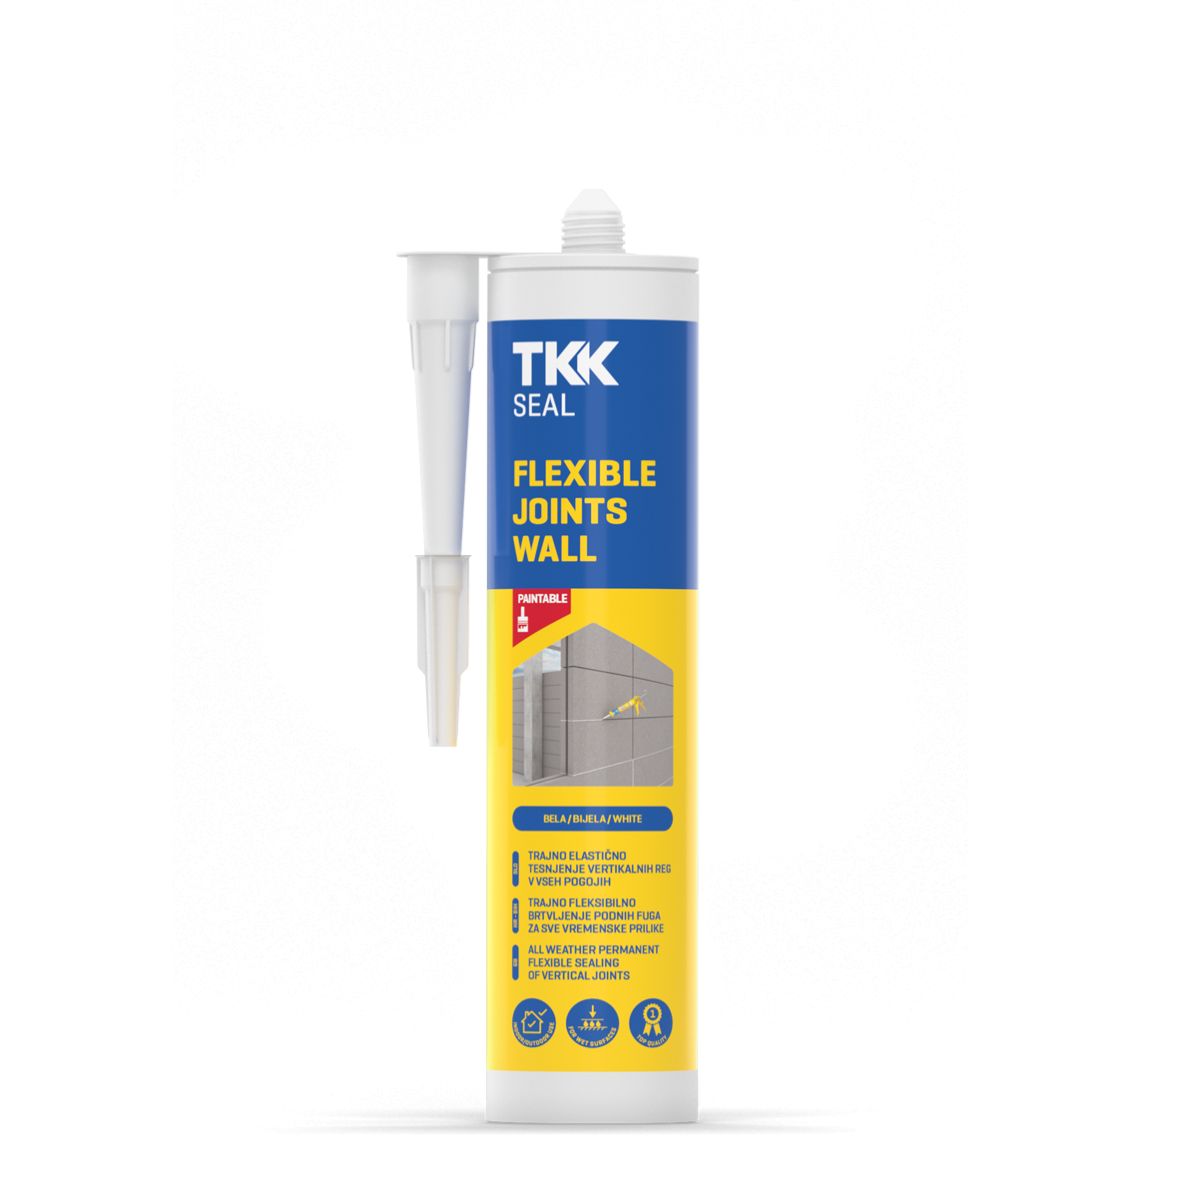 TKK Seal Flexible Joints Wall